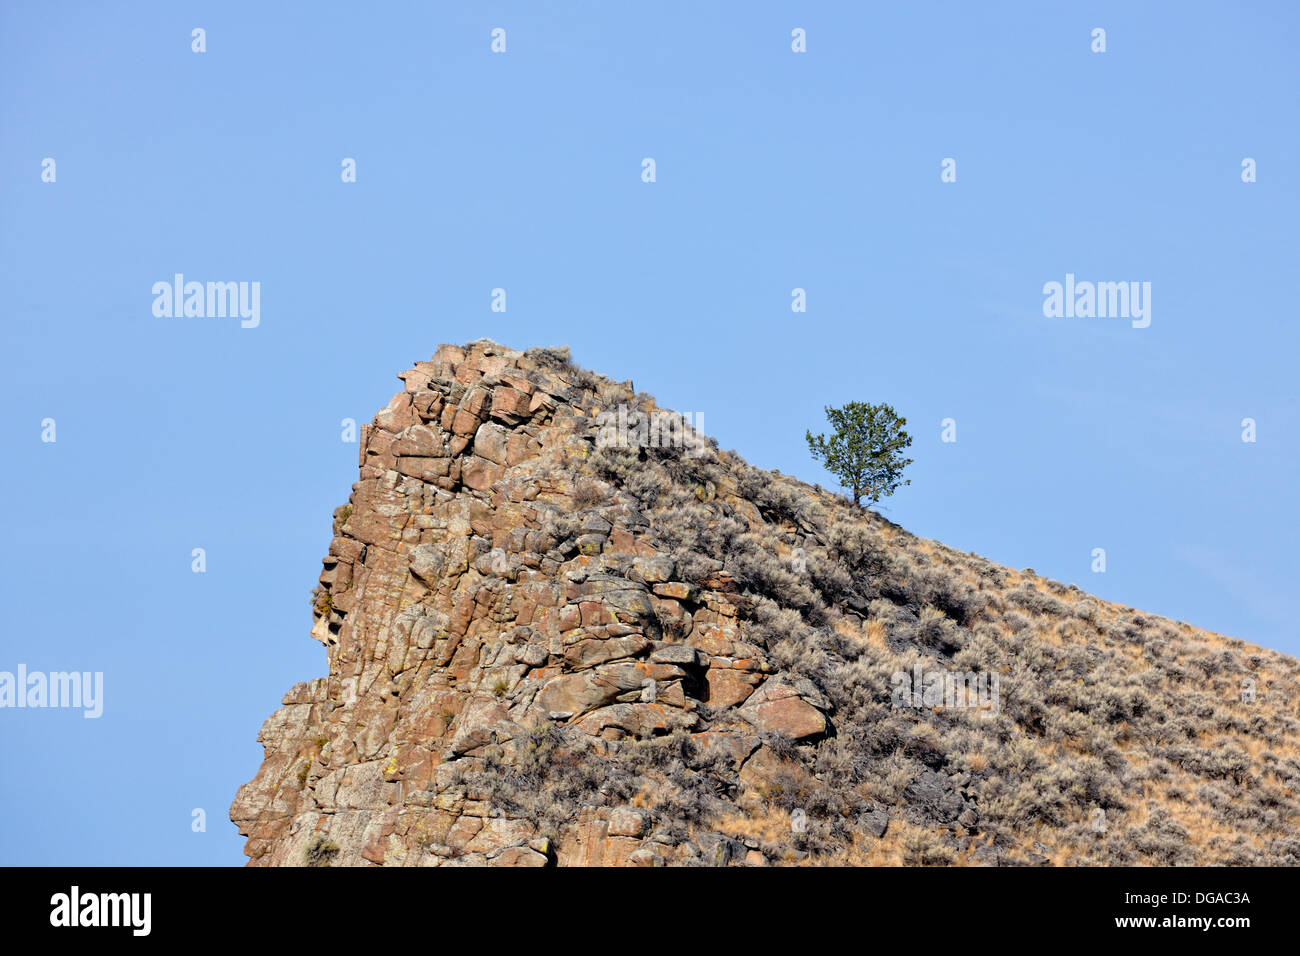 Rock outcrop with solitary pine tree Bozeman Montana USA Stock Photo